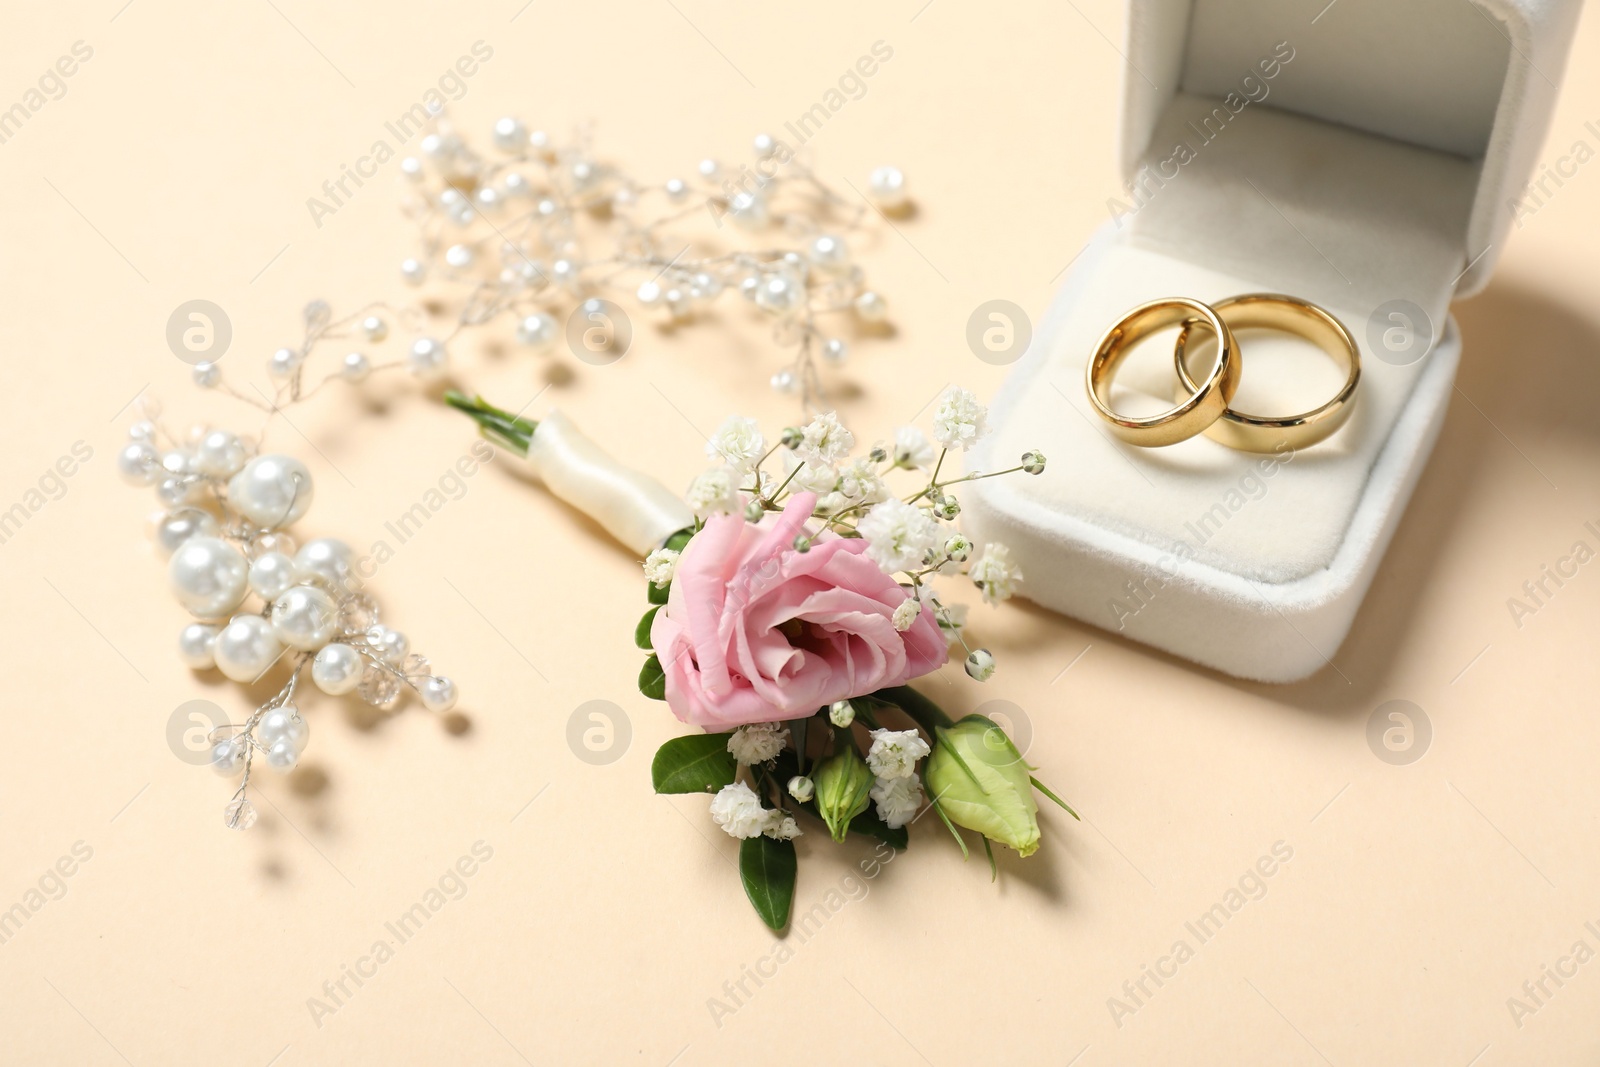 Photo of Wedding stuff. Stylish boutonniere, rings and decor on beige background, closeup